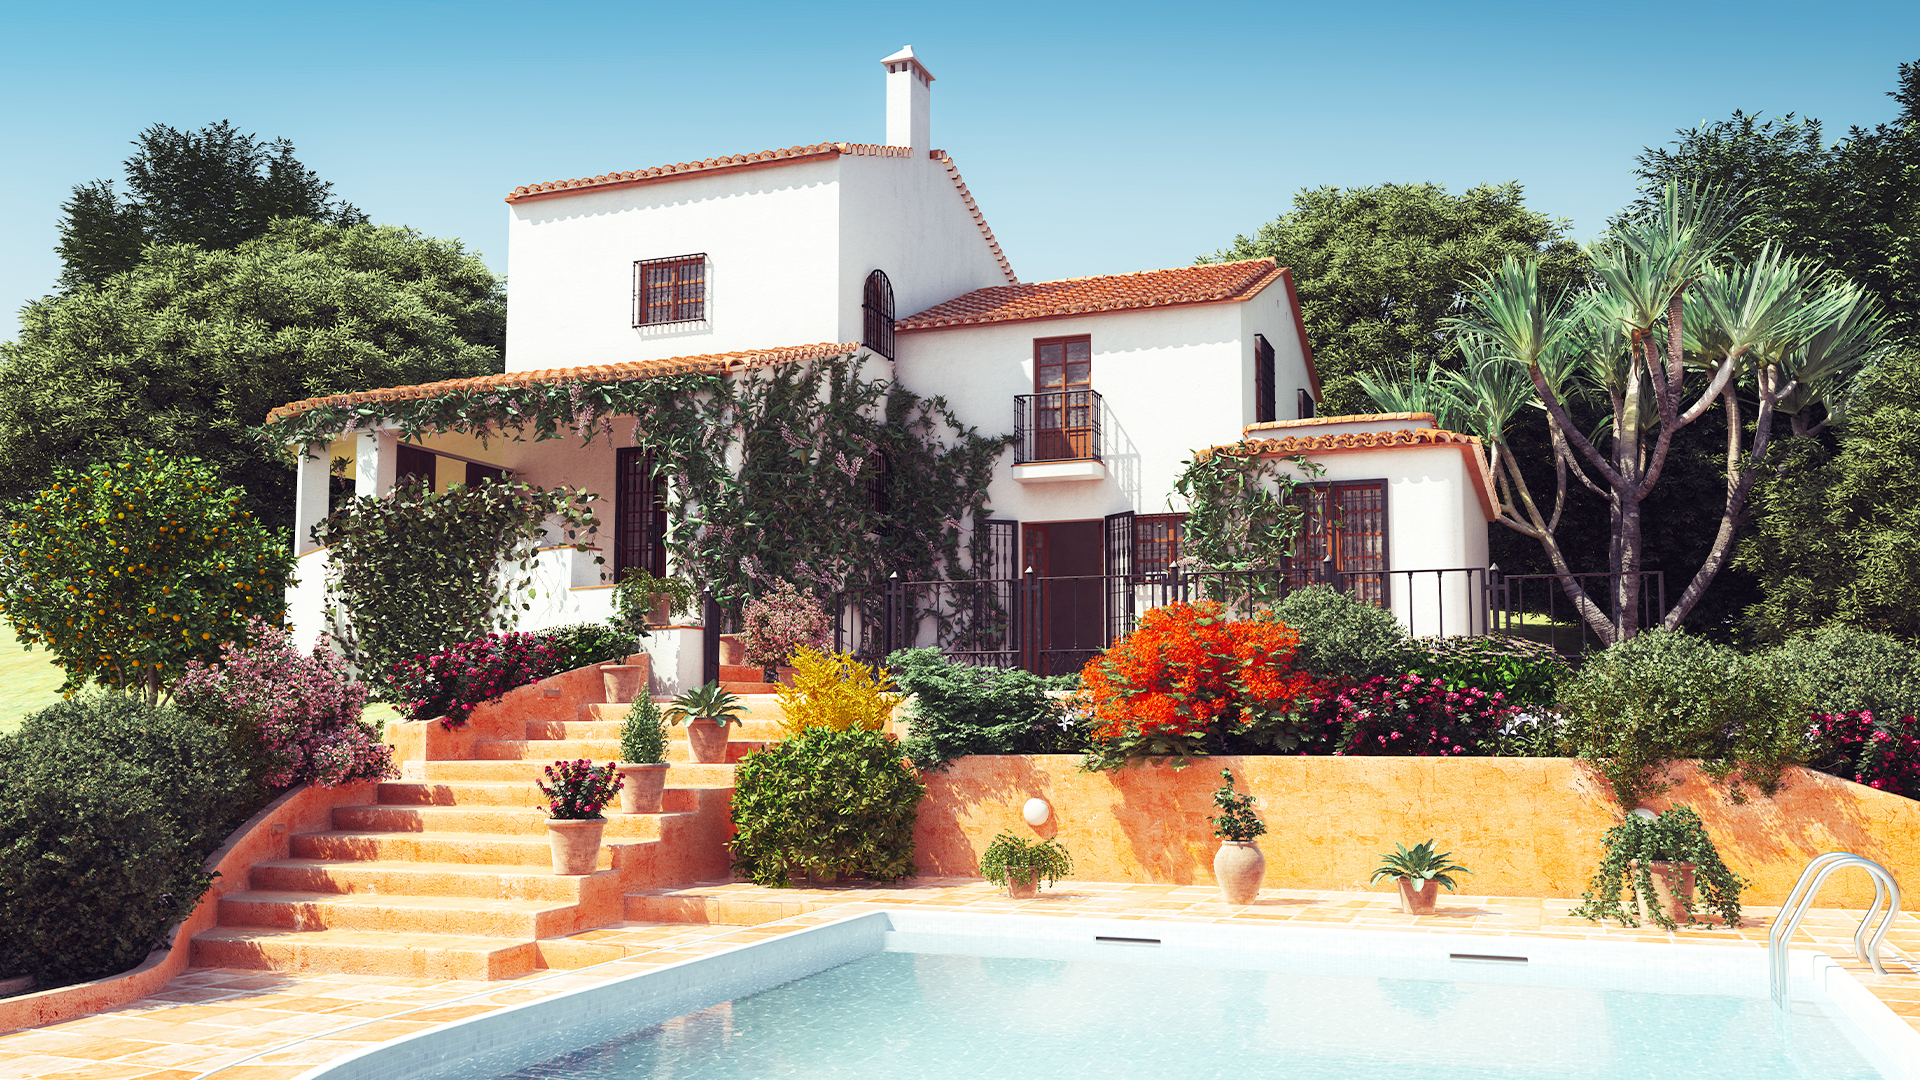 Most Popular House Style Mediterranean